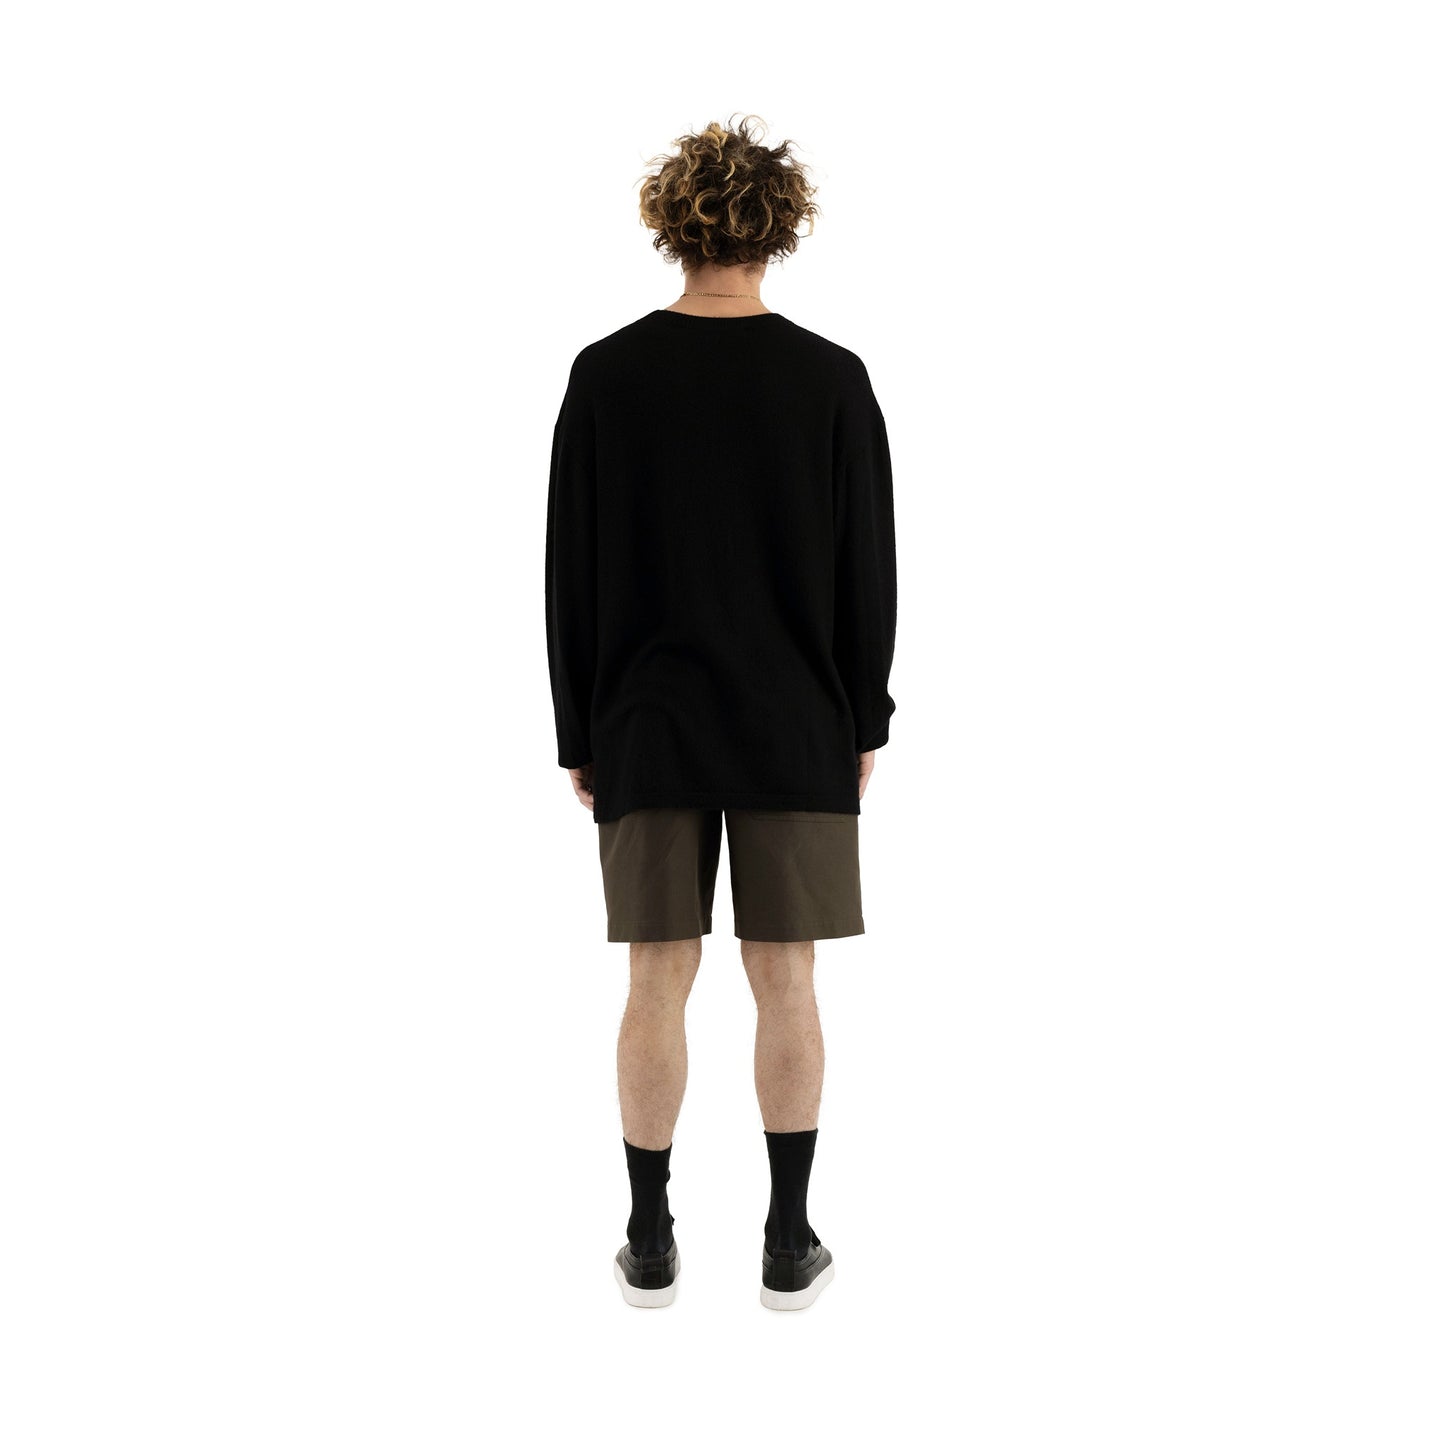 Neil Exaggerated Unlined Cotton Drawstring Shorts Dark Khaki Brown